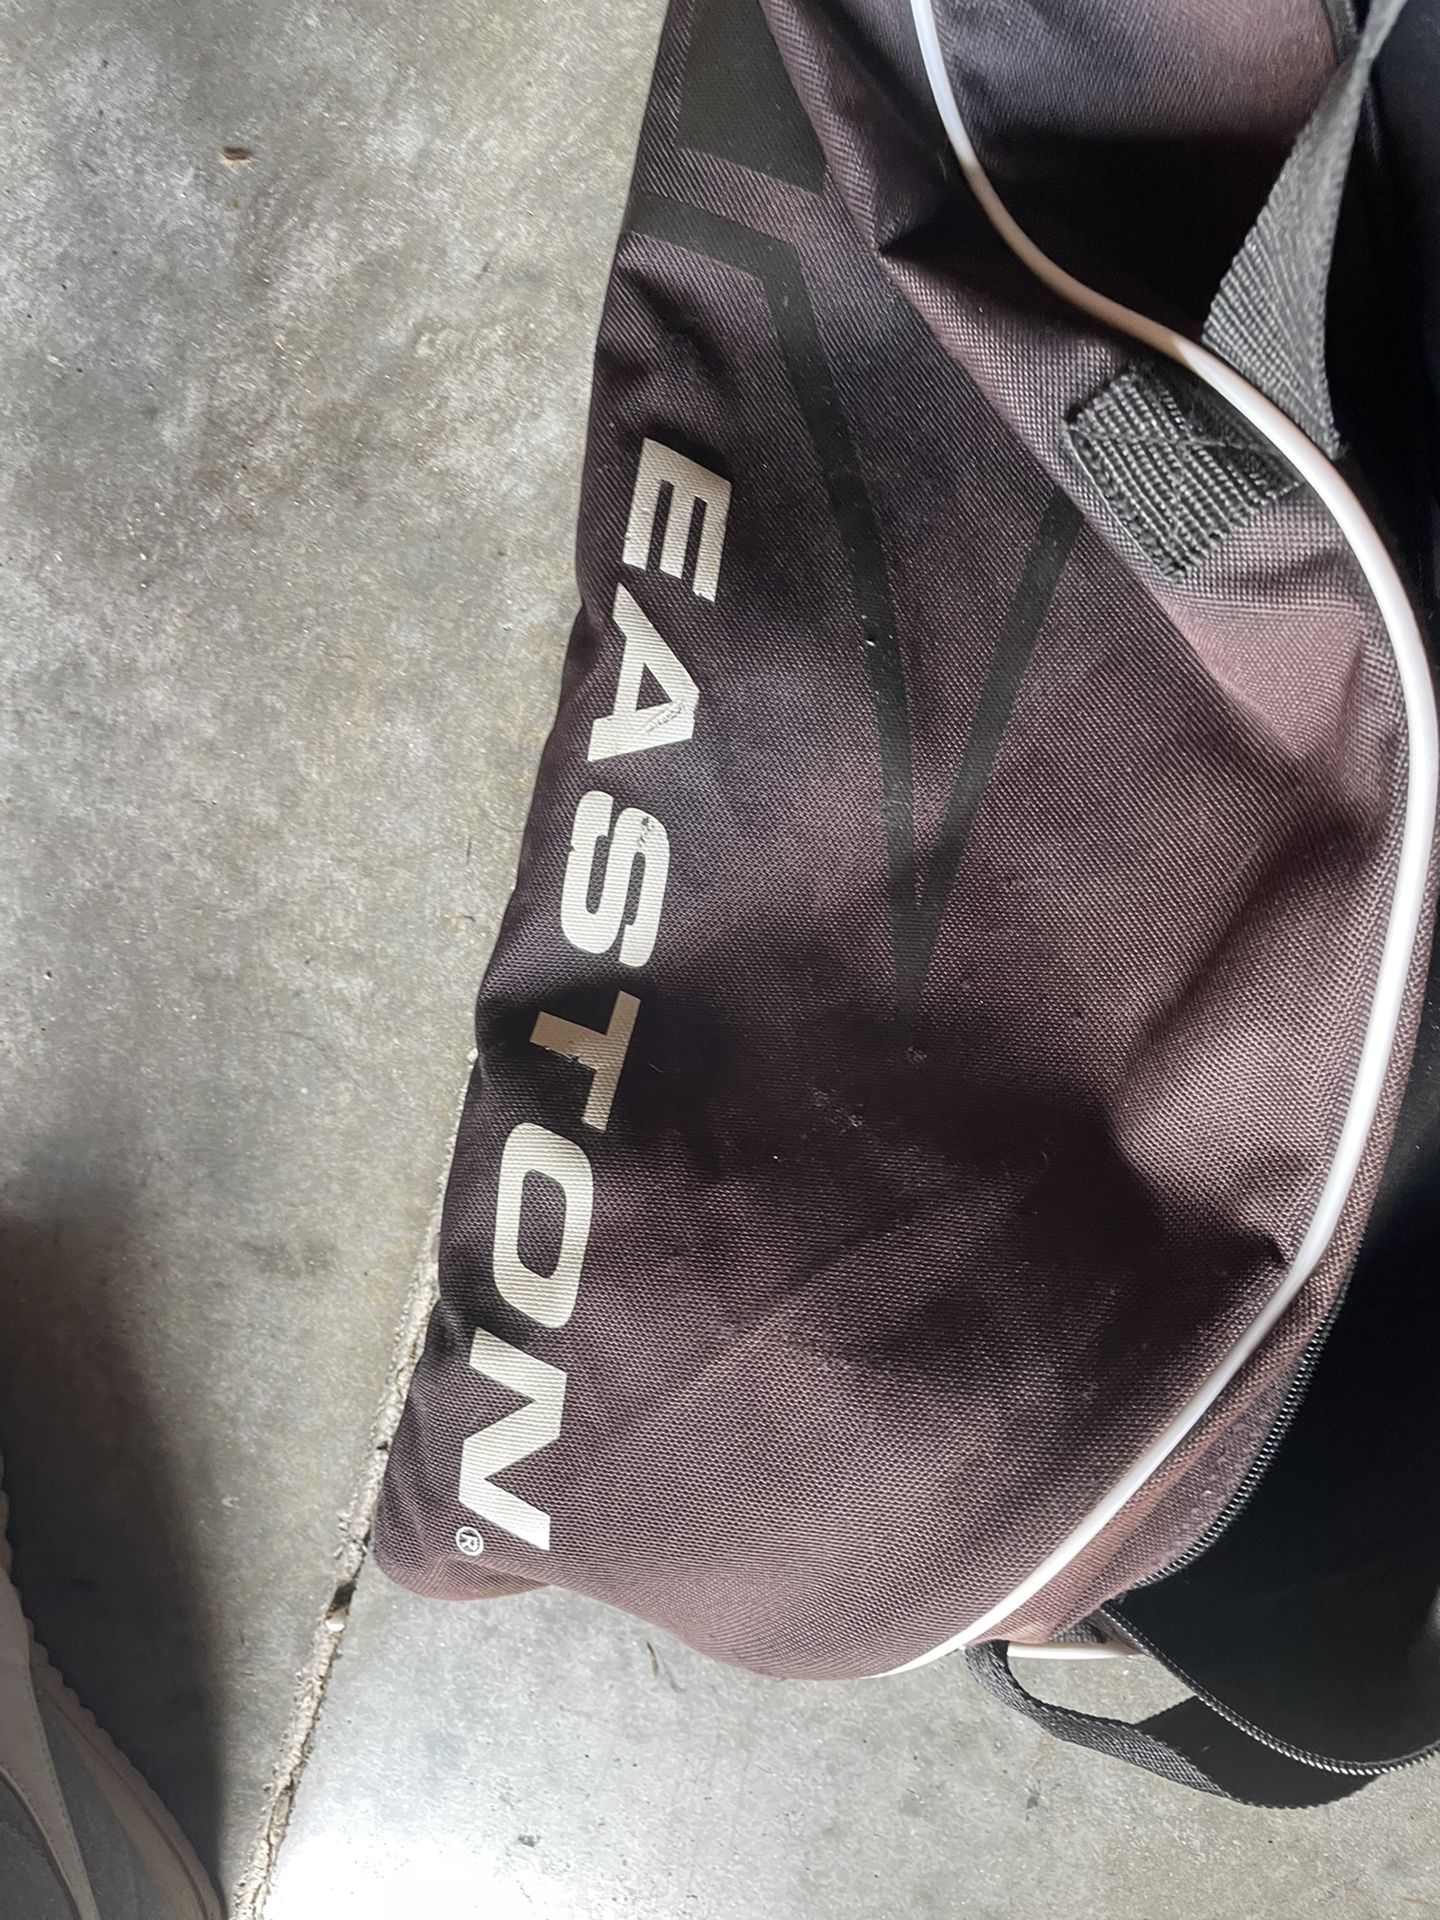 Easton baseball gear bag  